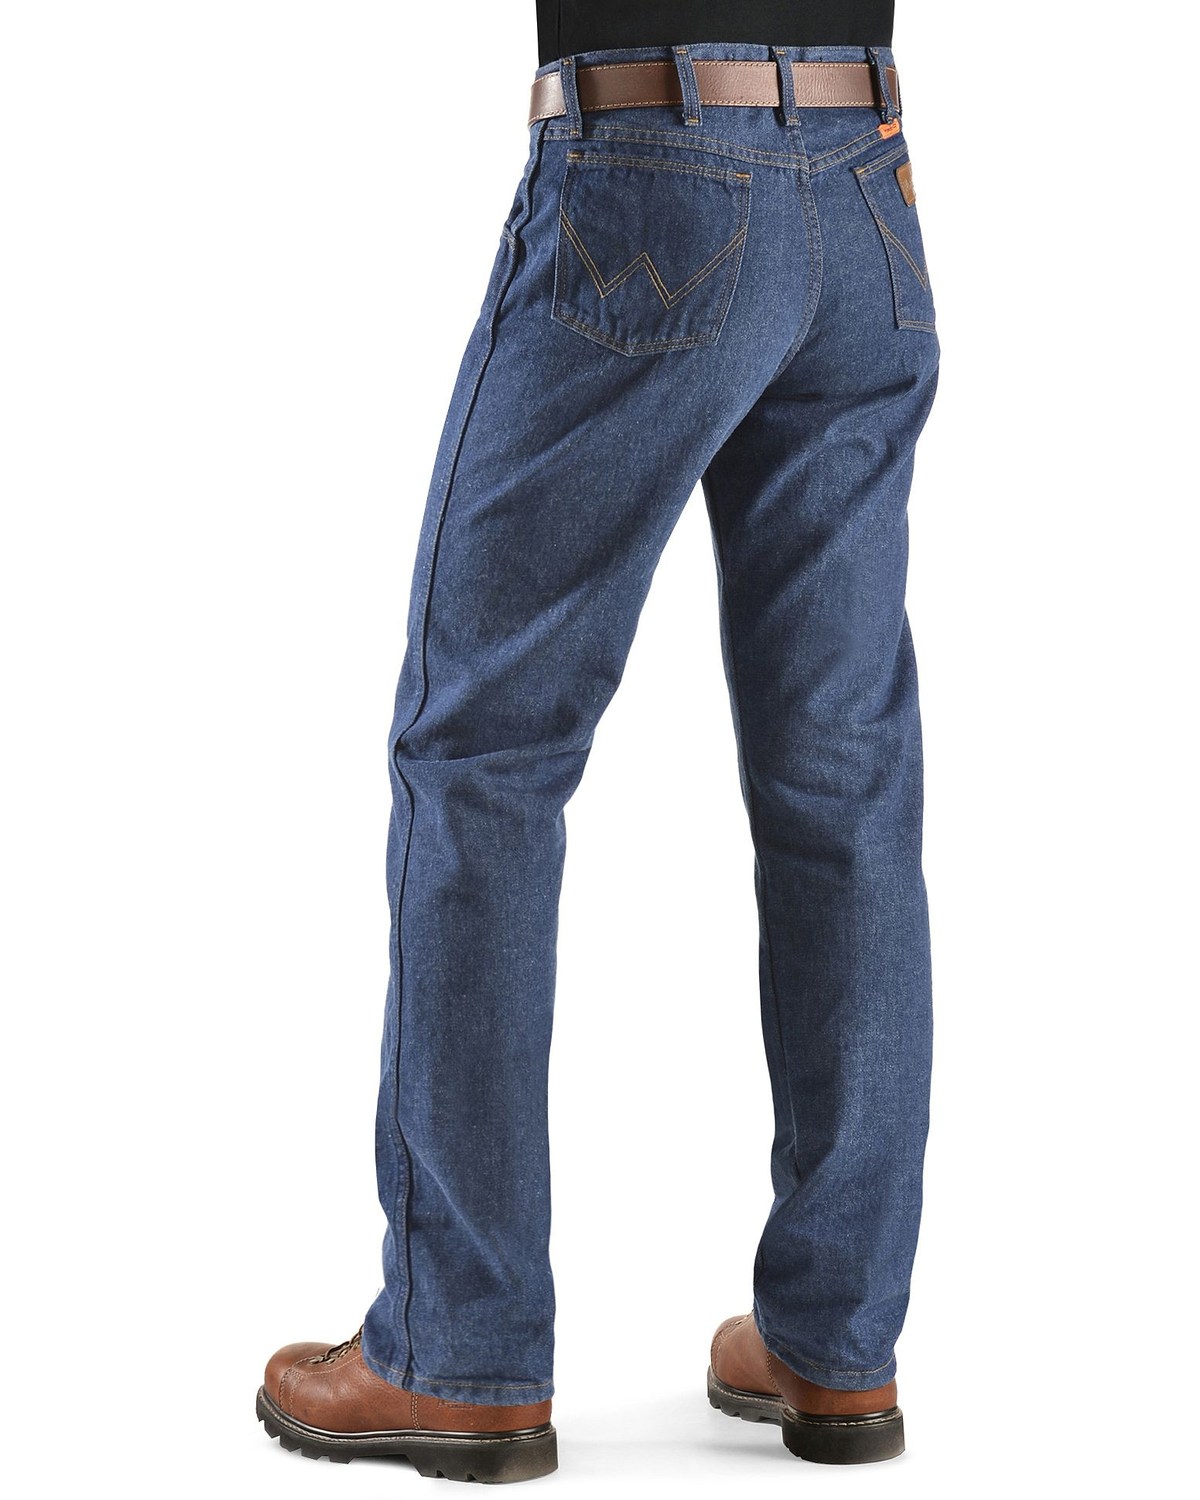 Wrangler Men's FR Lightweight Regular Fit Jeans